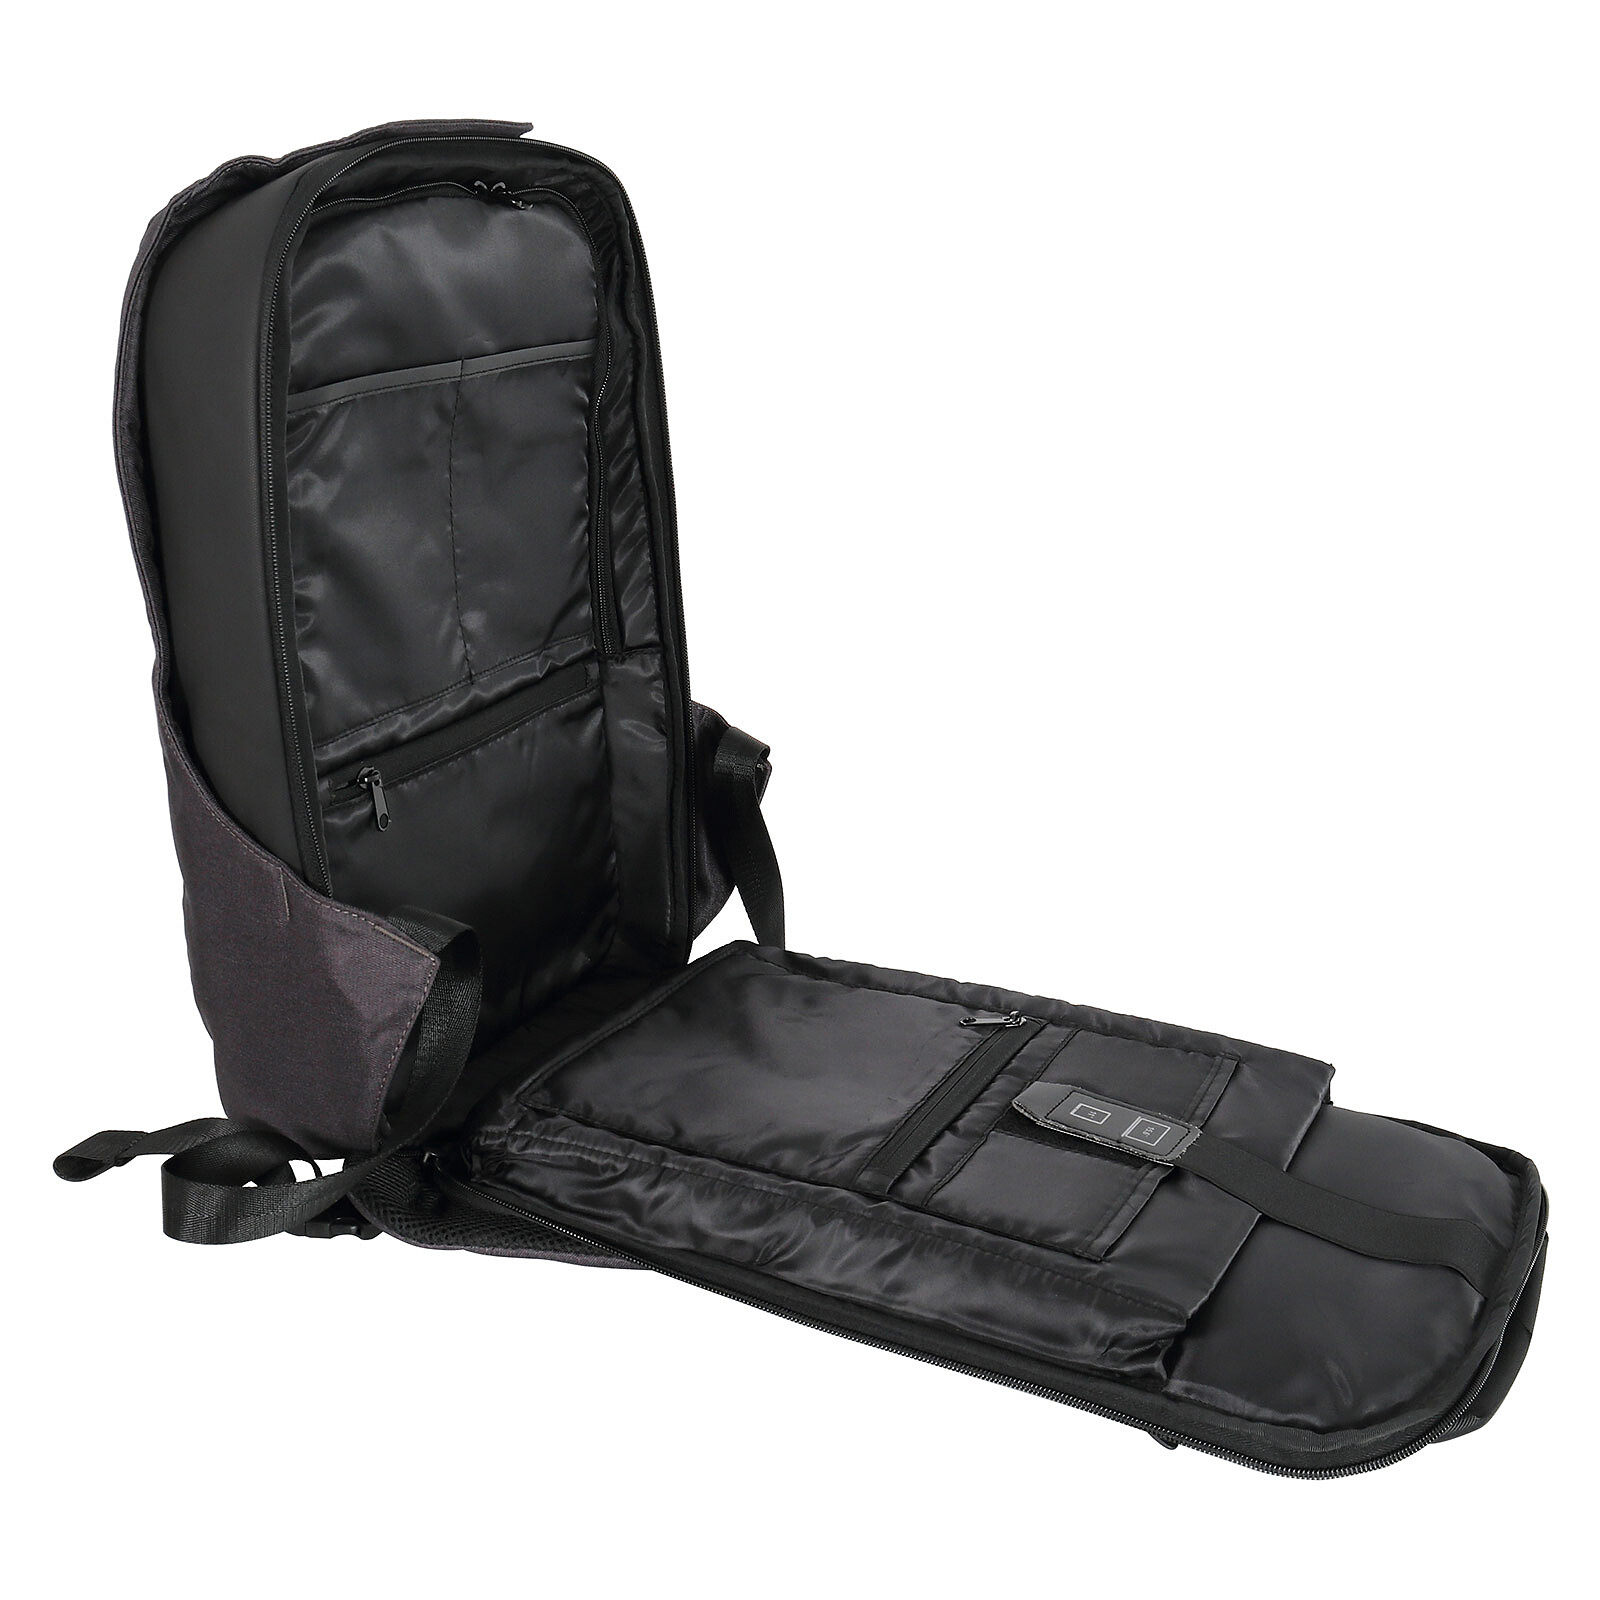 INOVU Compact 15 - Bag, backpack, case - LDLC 3-year warranty